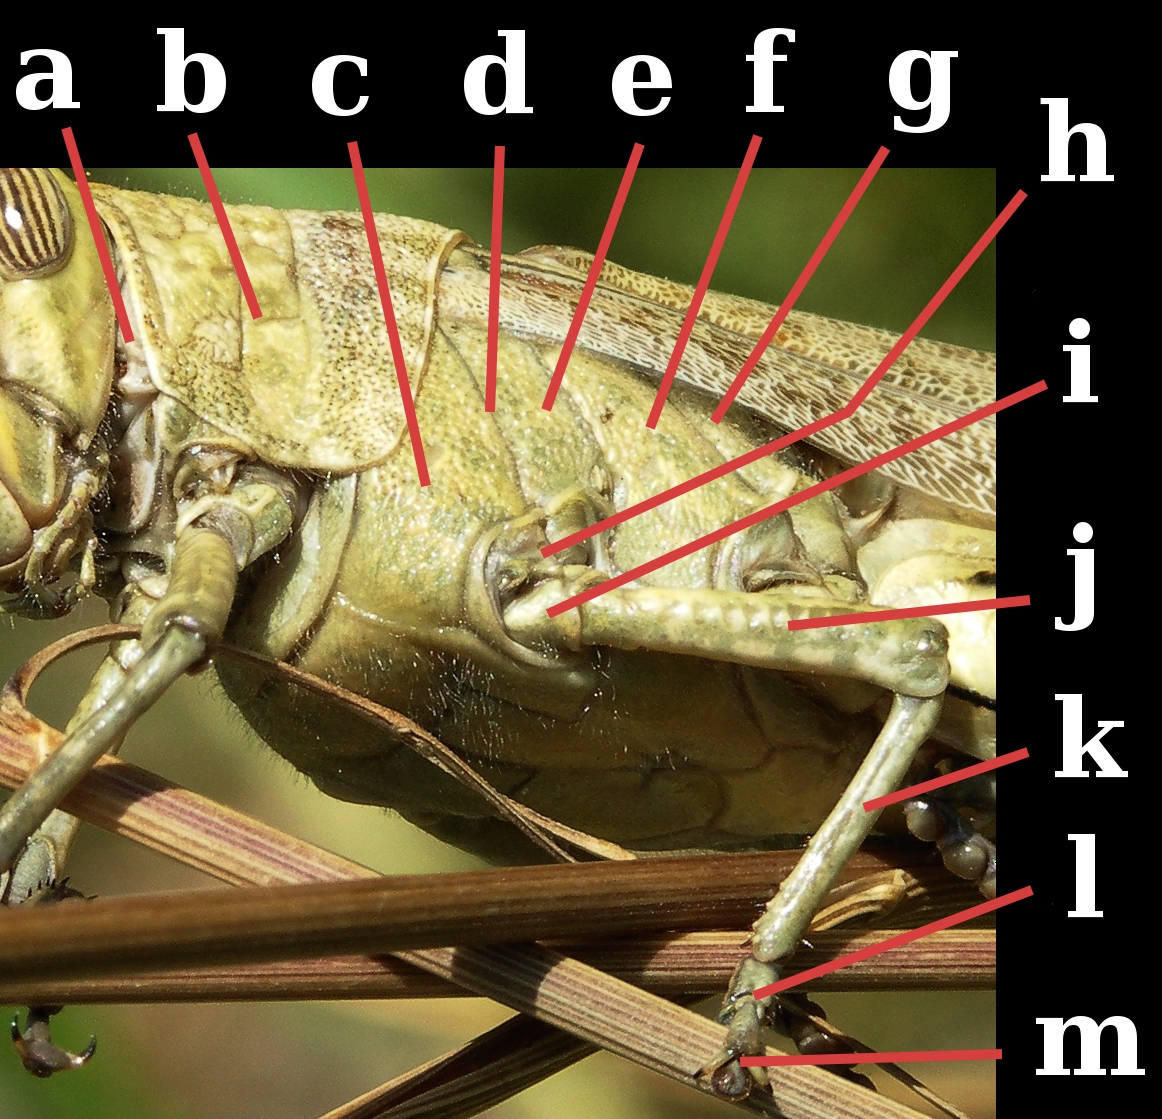 Grasshopper_thorax_lateral.jpg